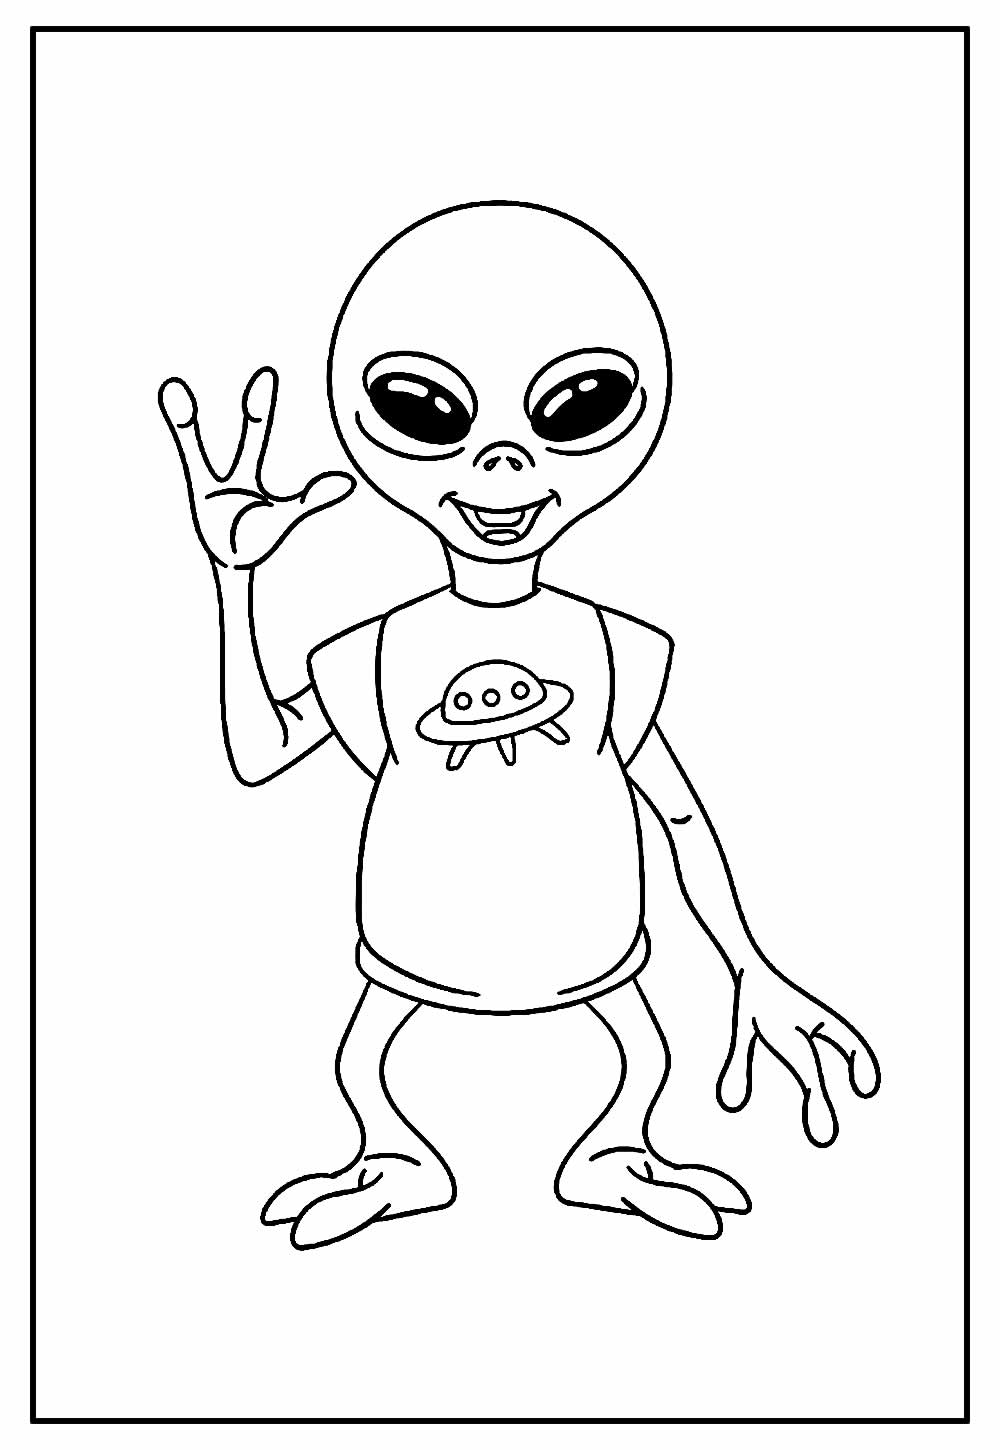 21+ Desenhos de Alien para Imprimir e Colorir/Pintar